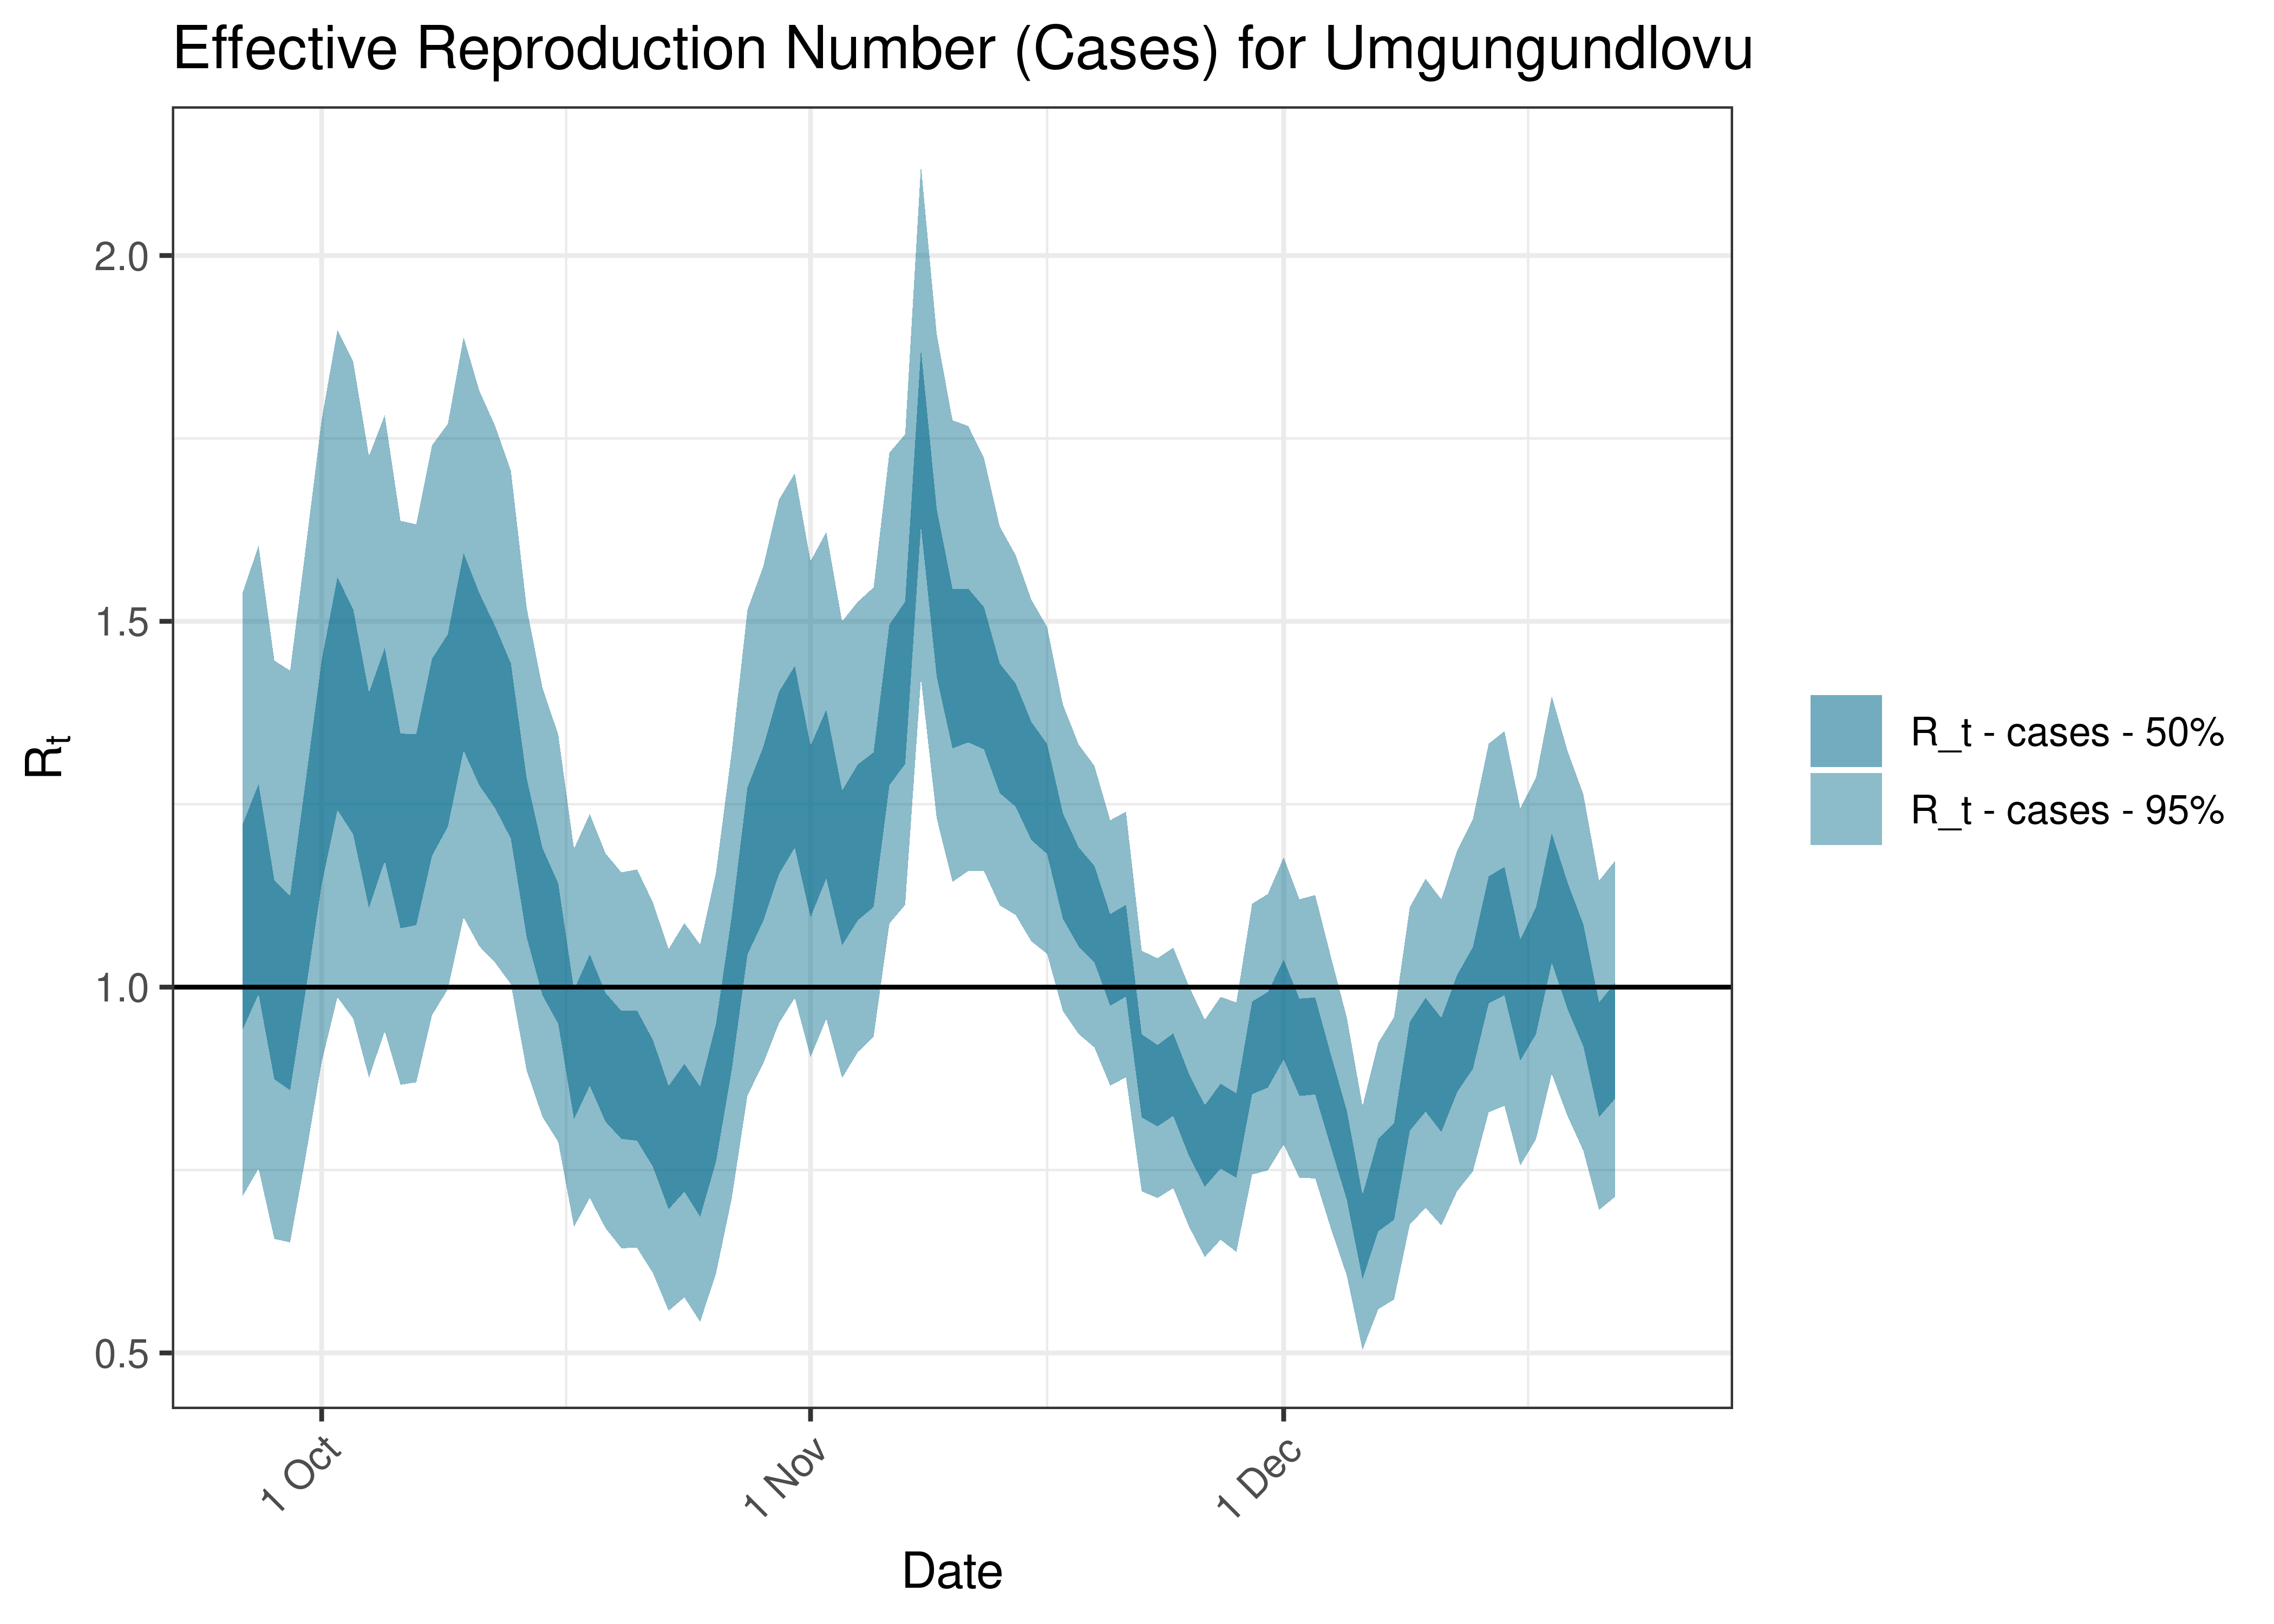 Estimated Effective Reproduction Number Based on Cases for Umgungundlovu over last 90 days